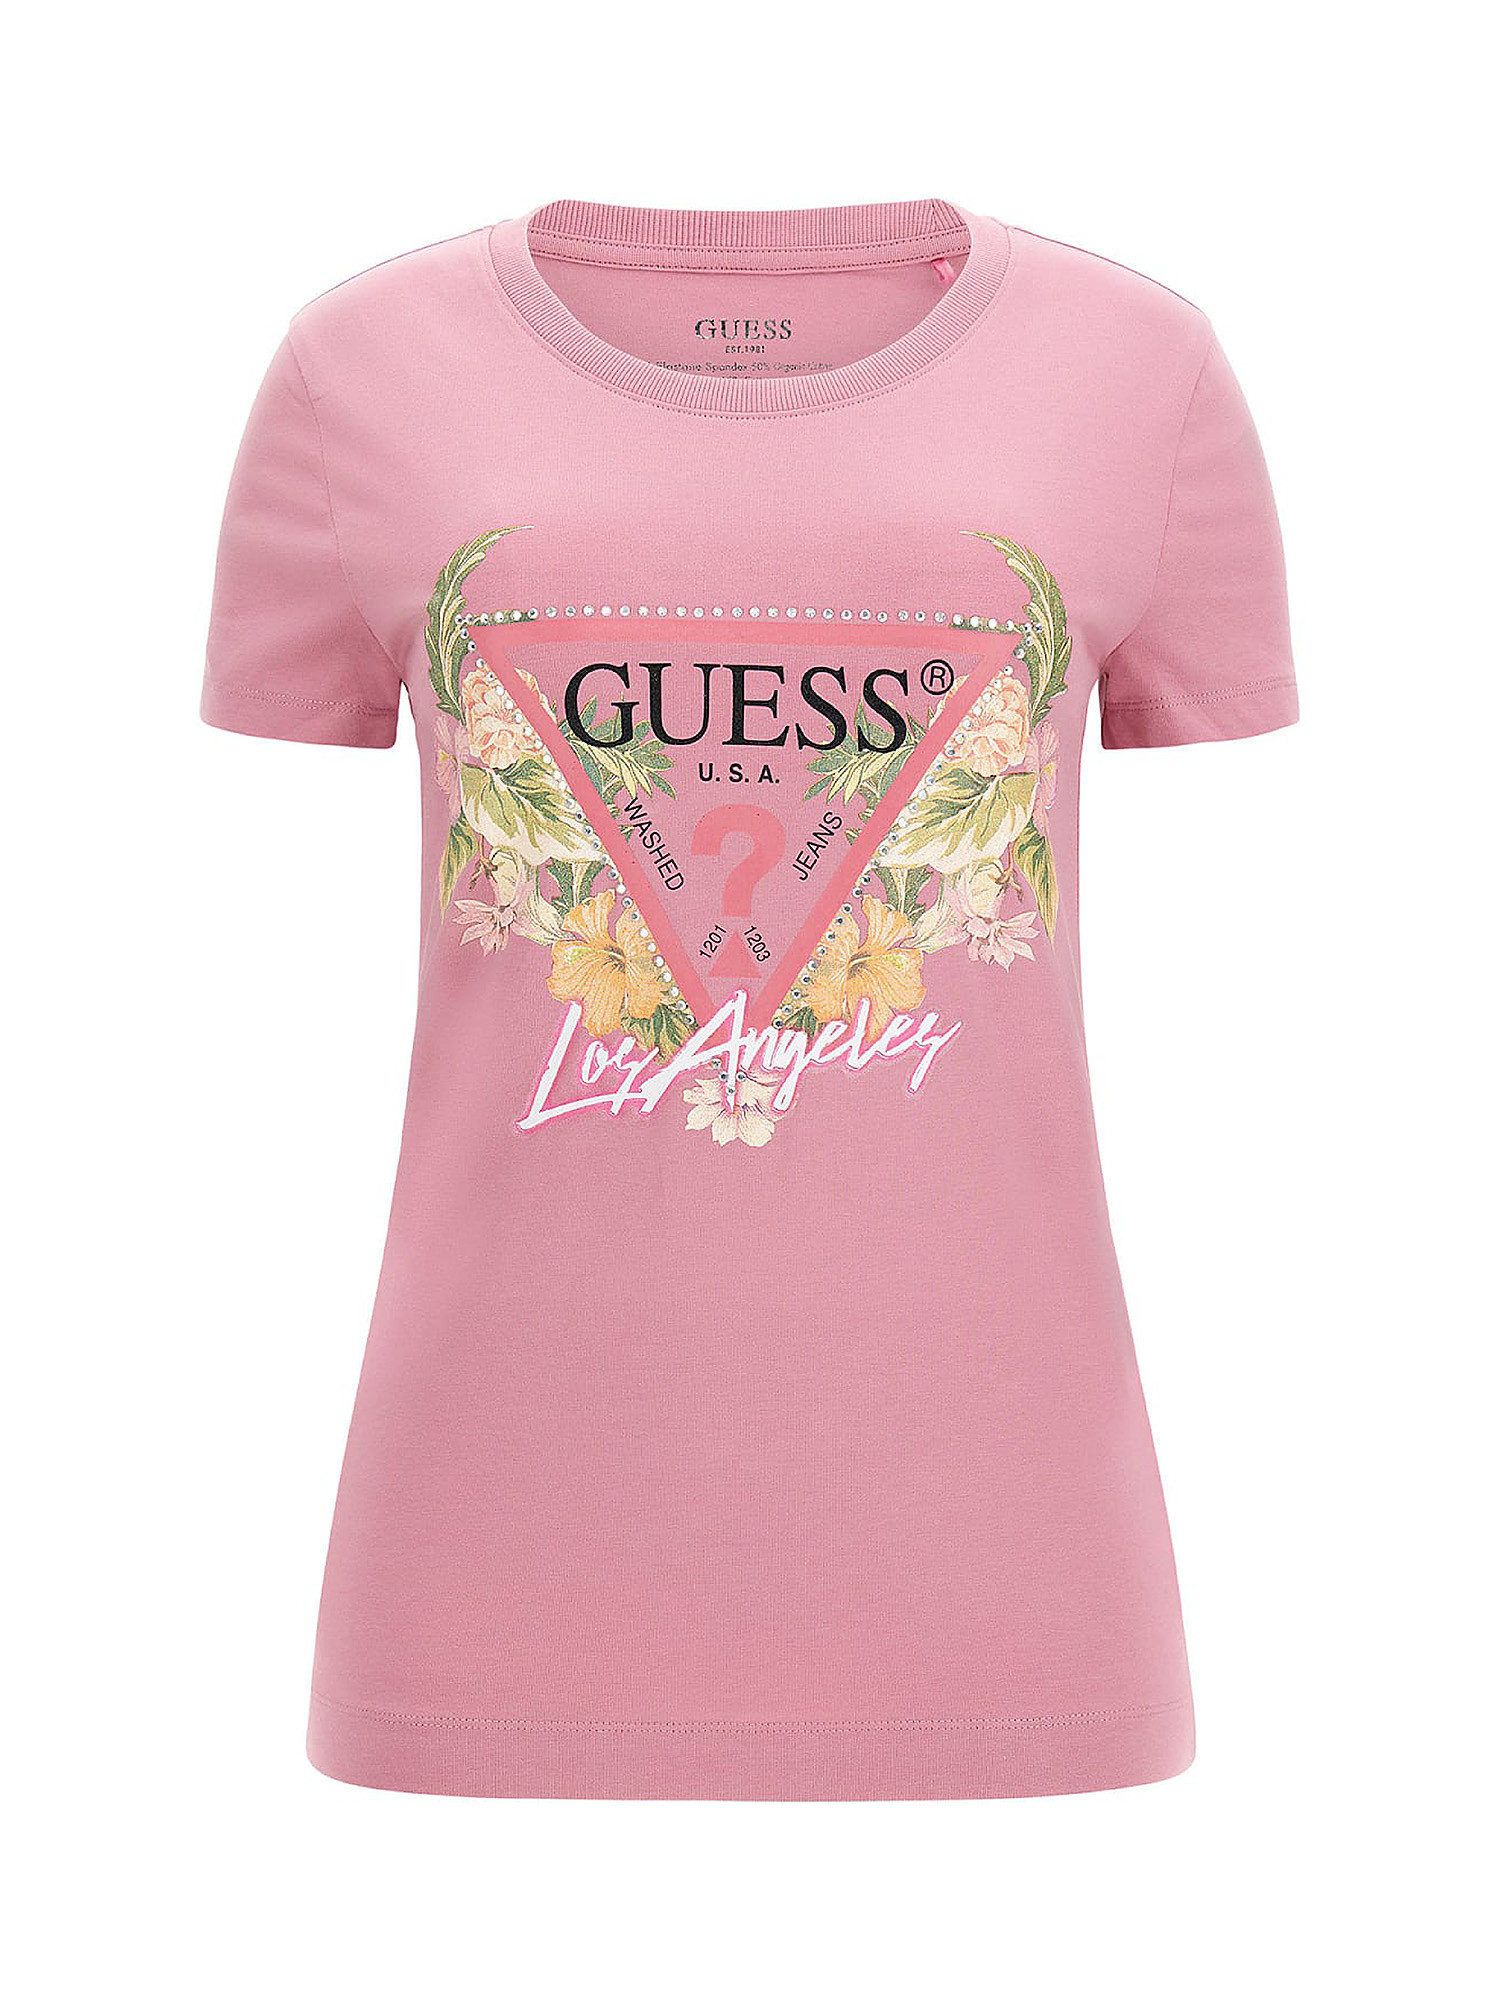 GUESS - Logo T-shirt, Pink, large image number 0